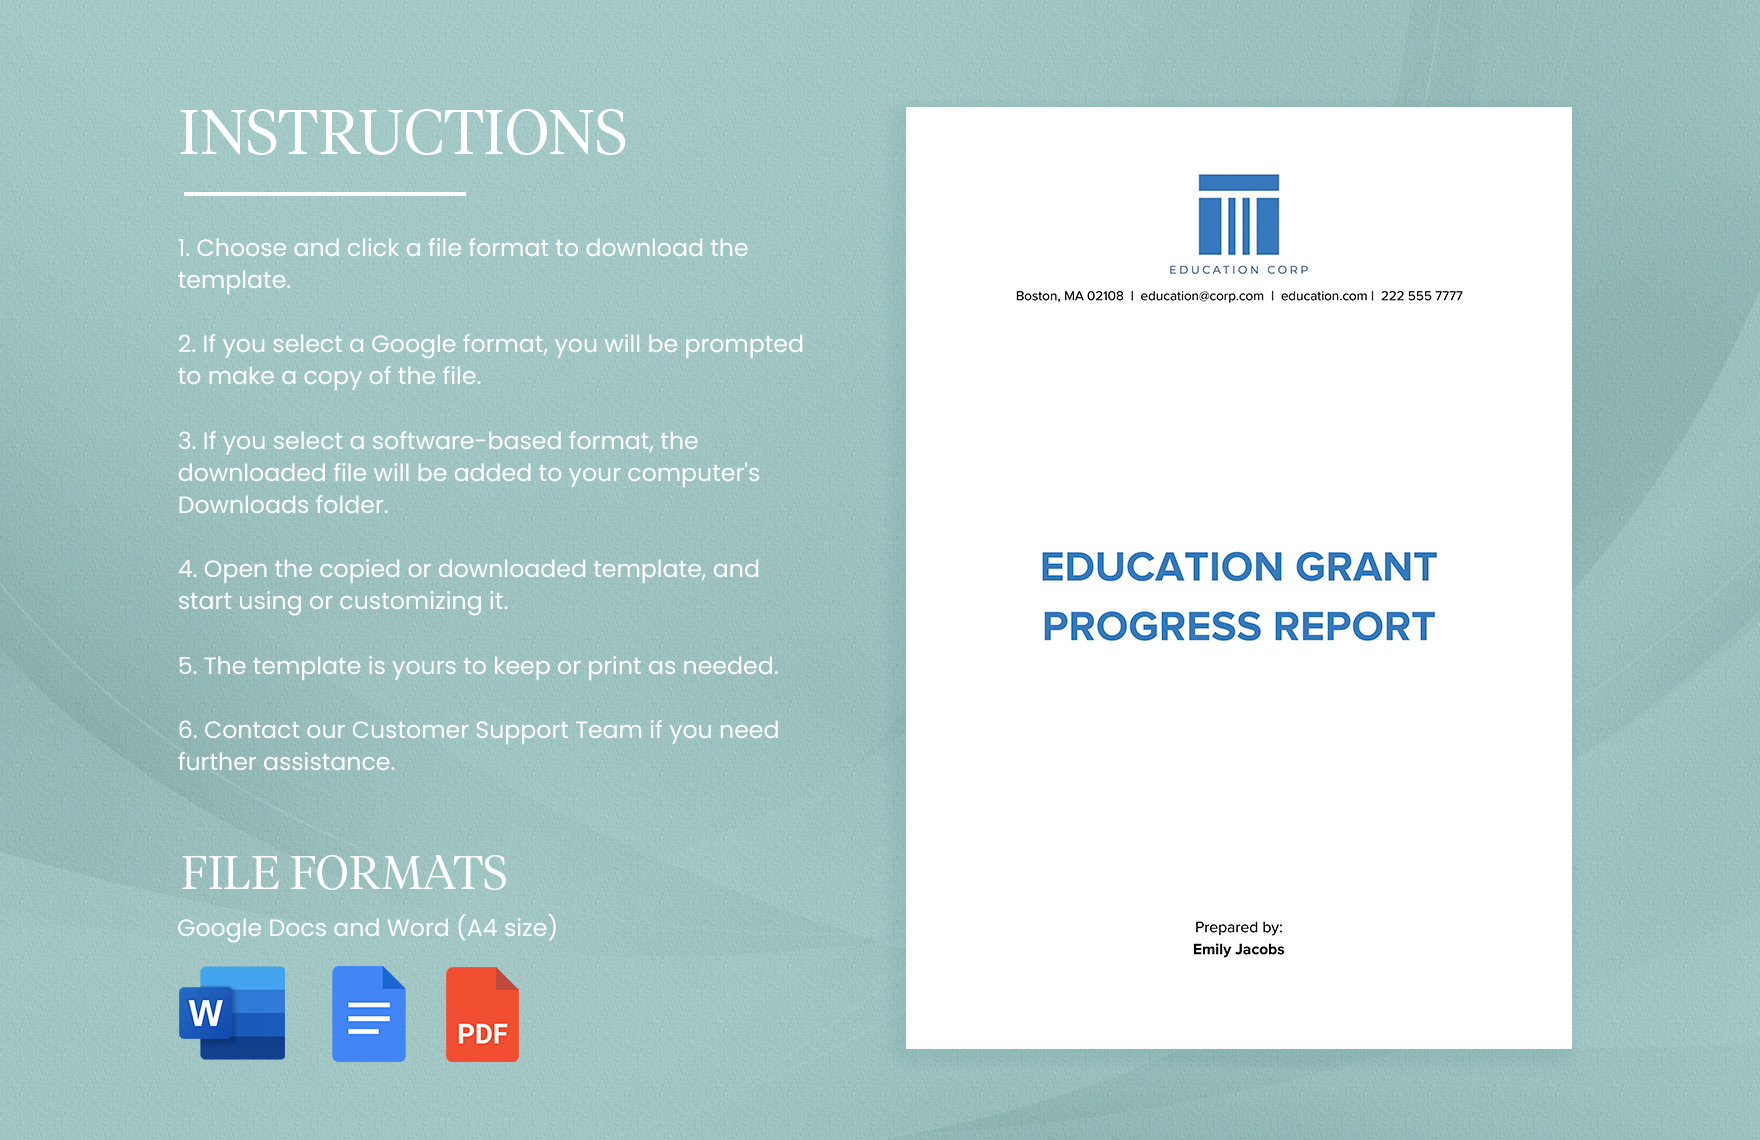 Education Grant Progress Report Template